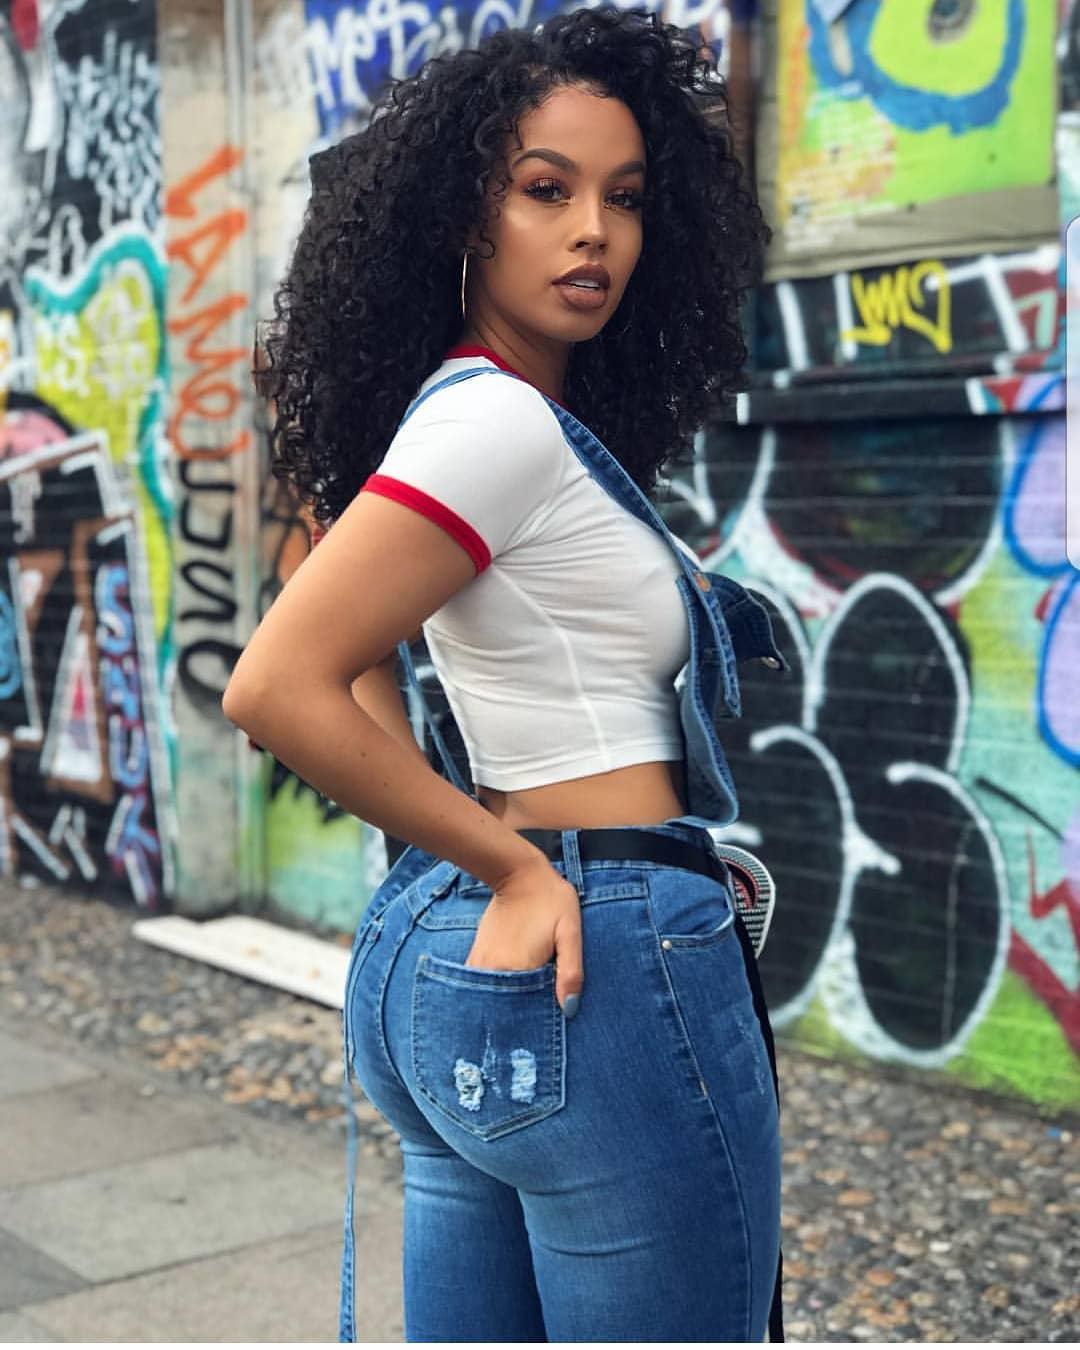 alain benavides recommends black girl tight jeans pic